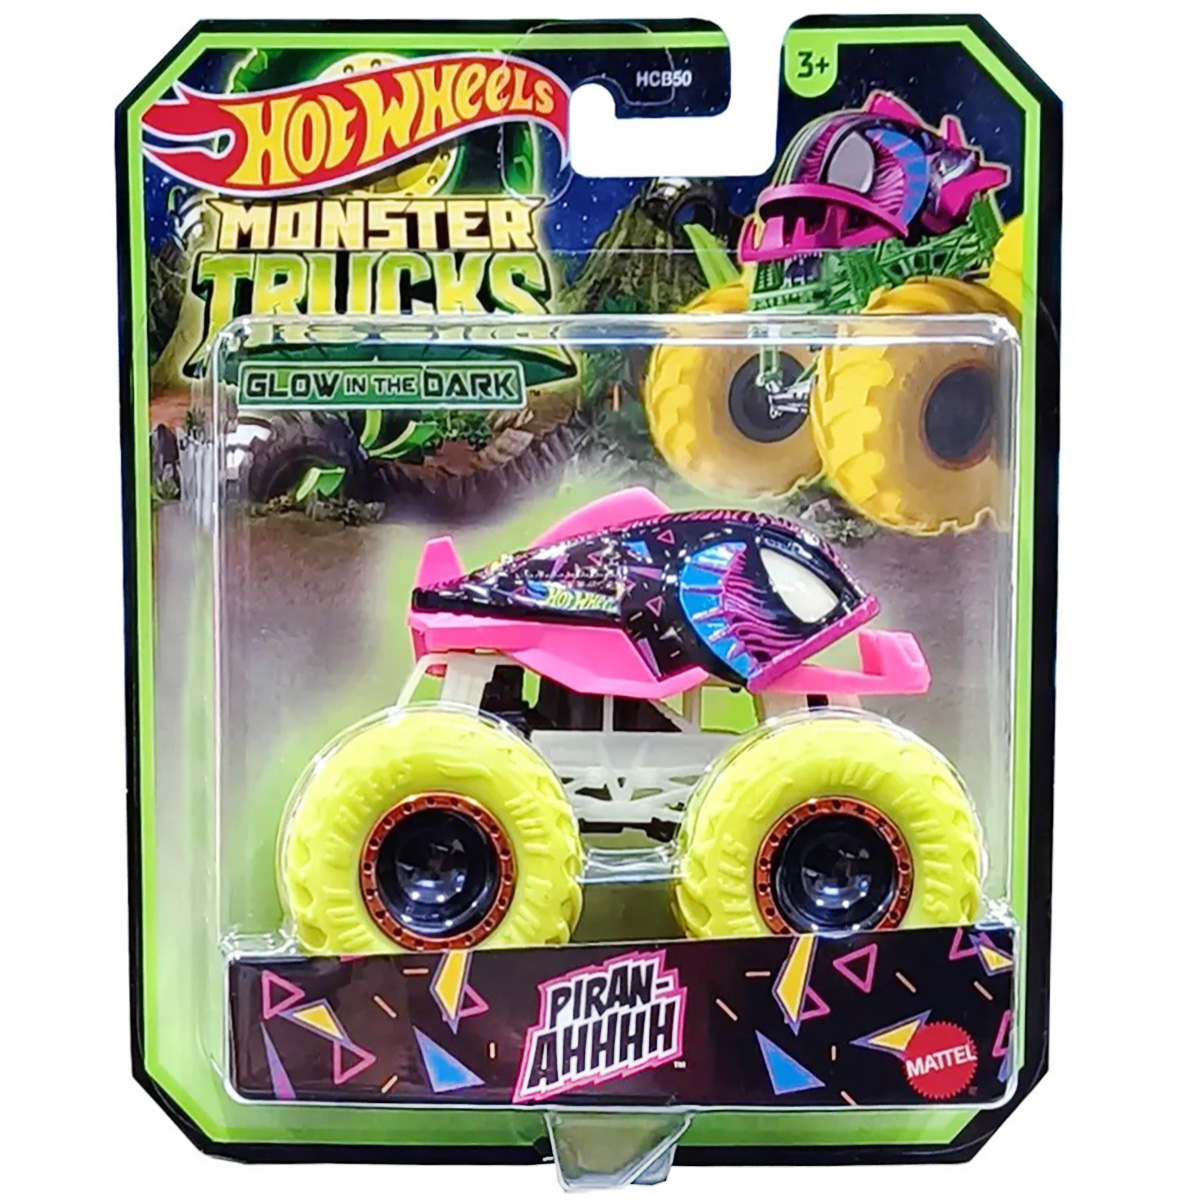 Masinuta Monster Trucks, Hot Wheels, Glow in the Dark, 1:64, Piran-Ahhhh, HWC85